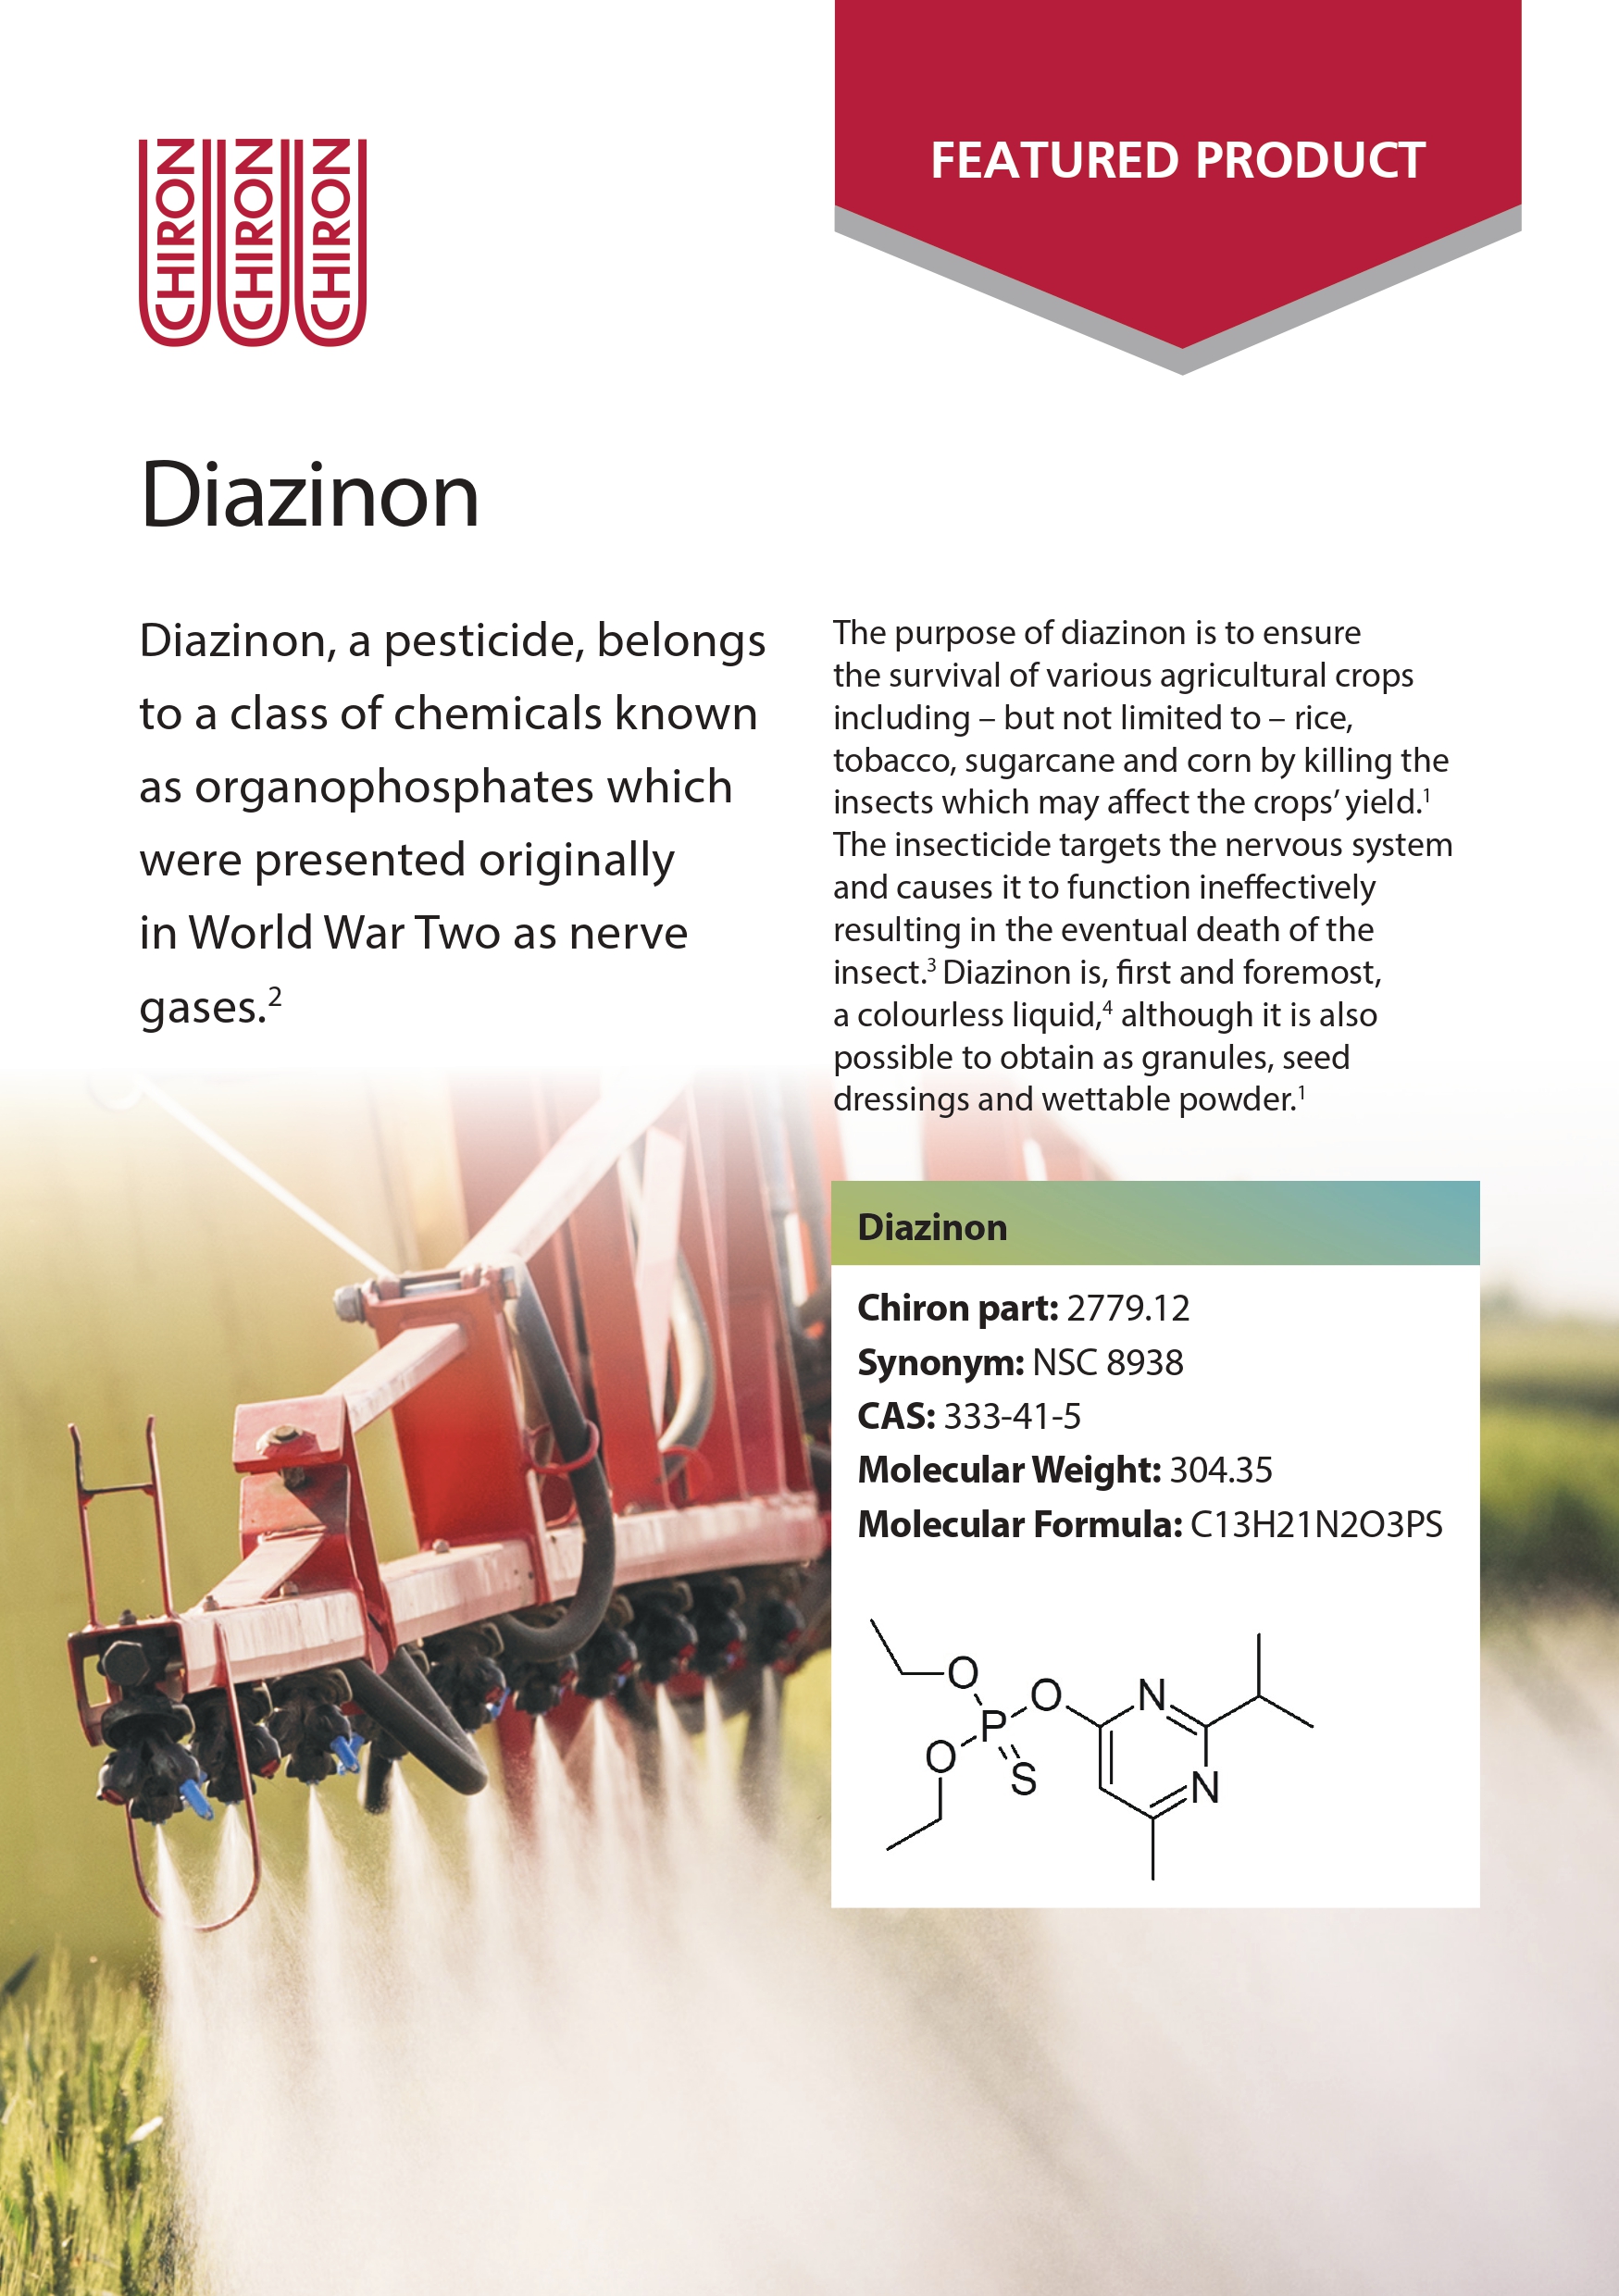 Featured product: Diazinon